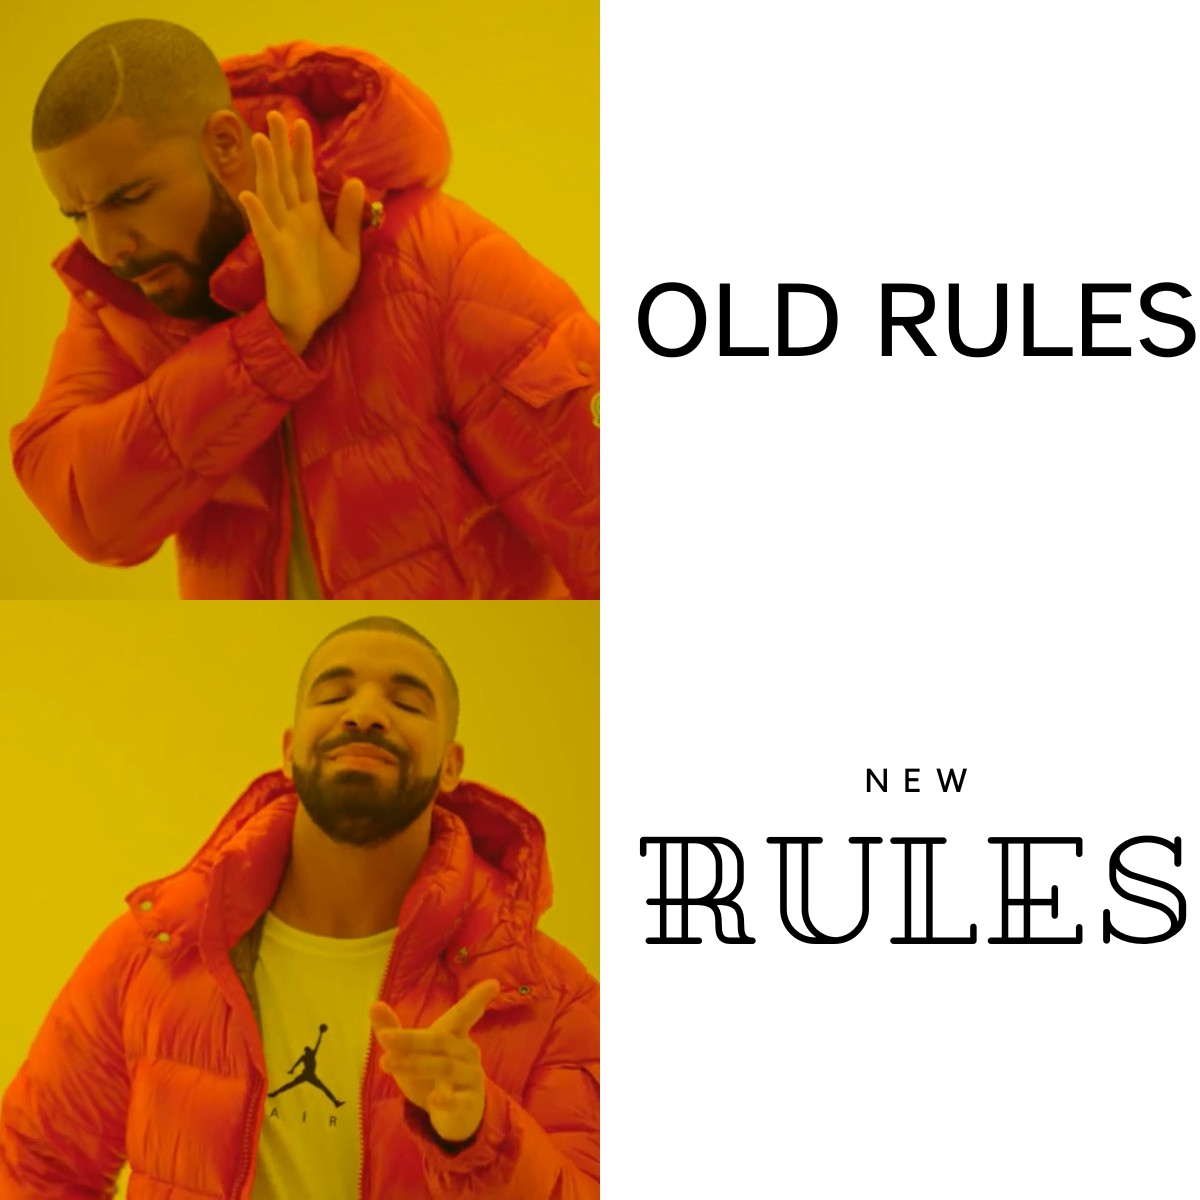 Rules Redone